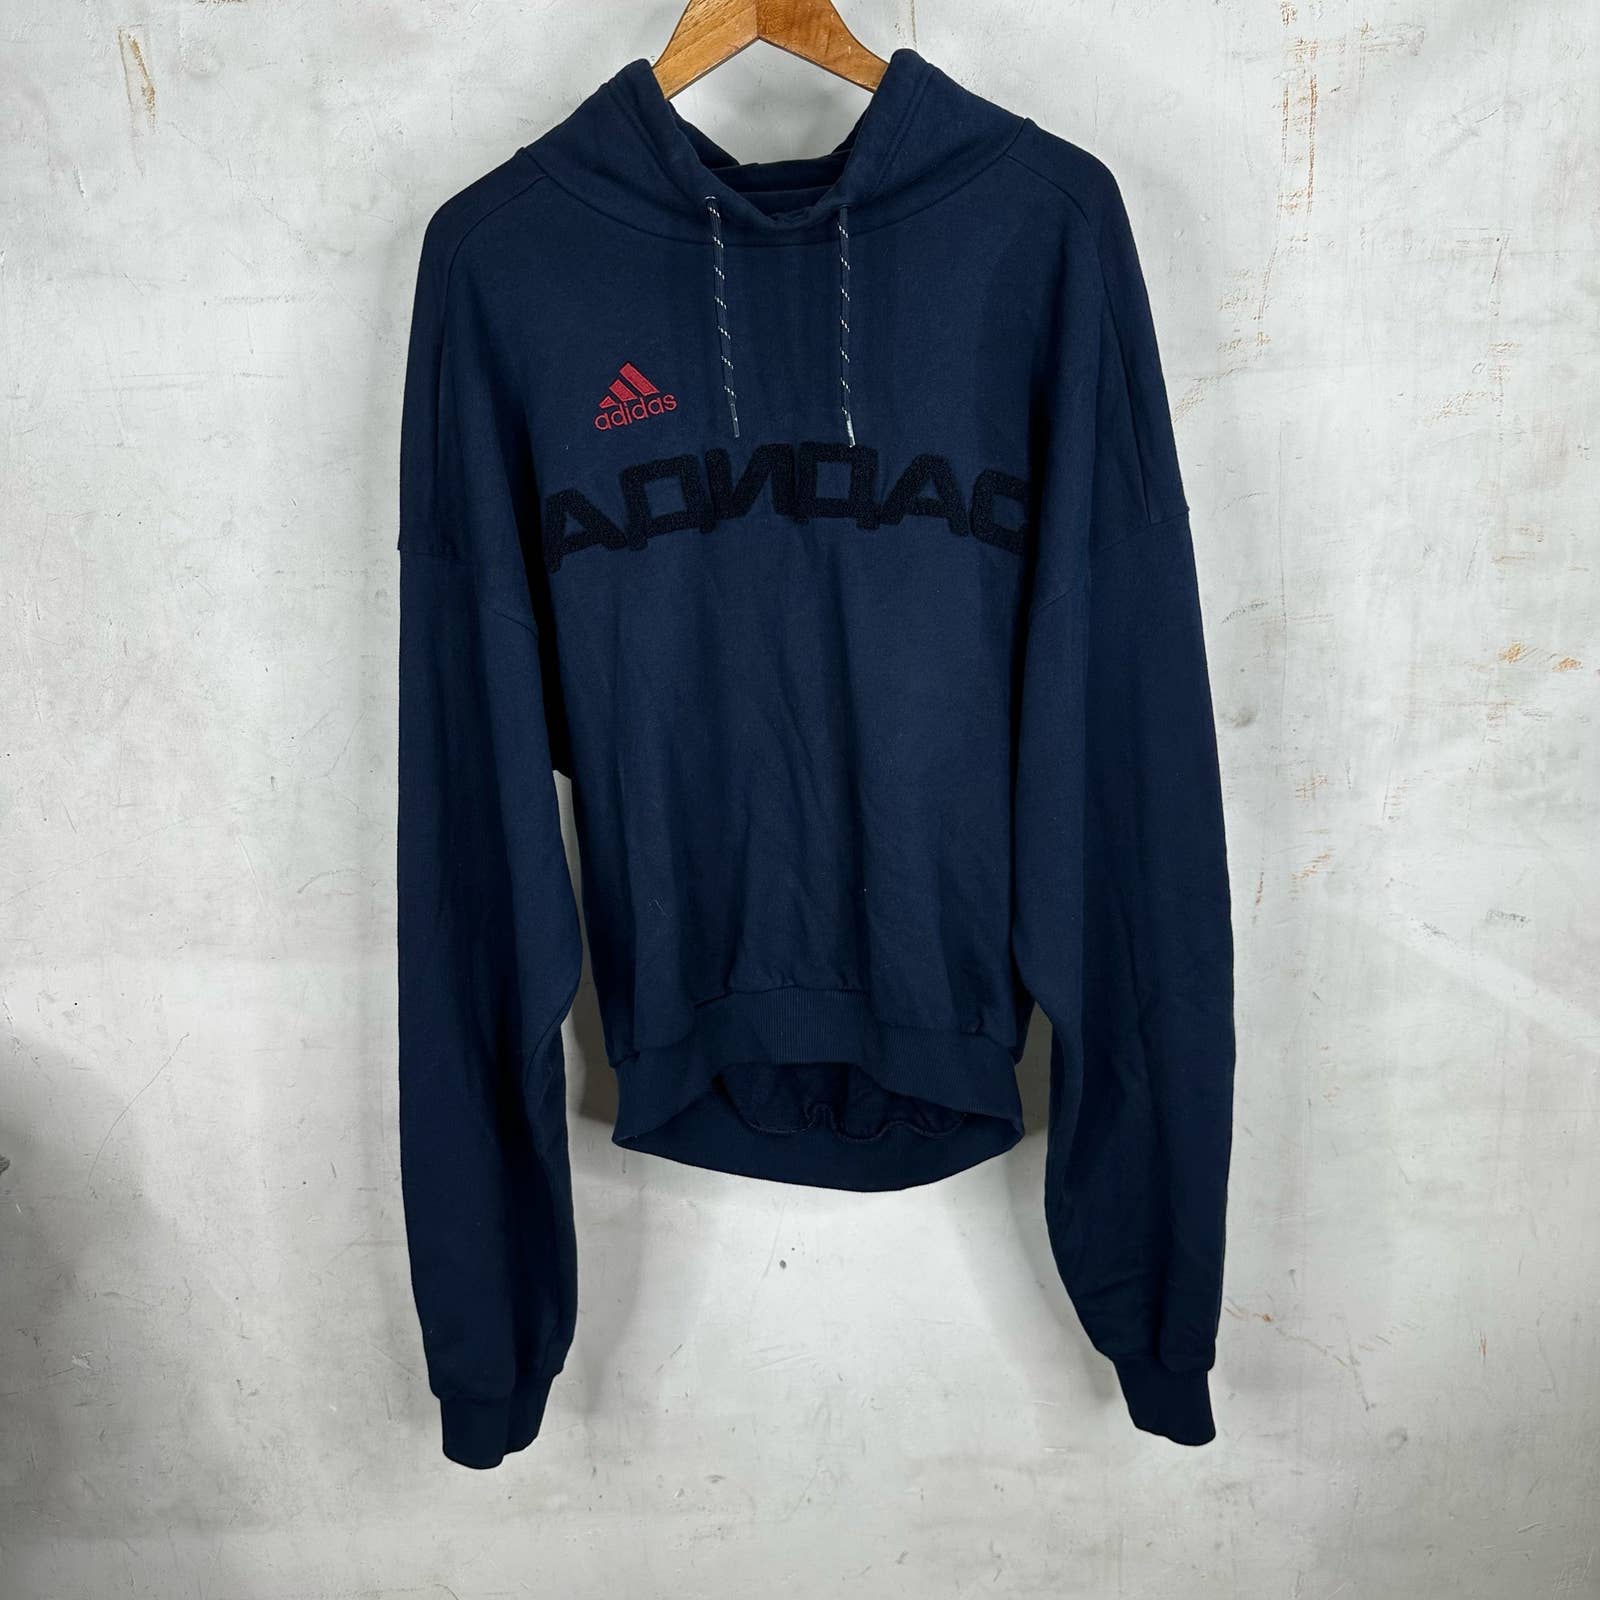 Gosha Rubchinsky x Adidas Turtleneck Sweater